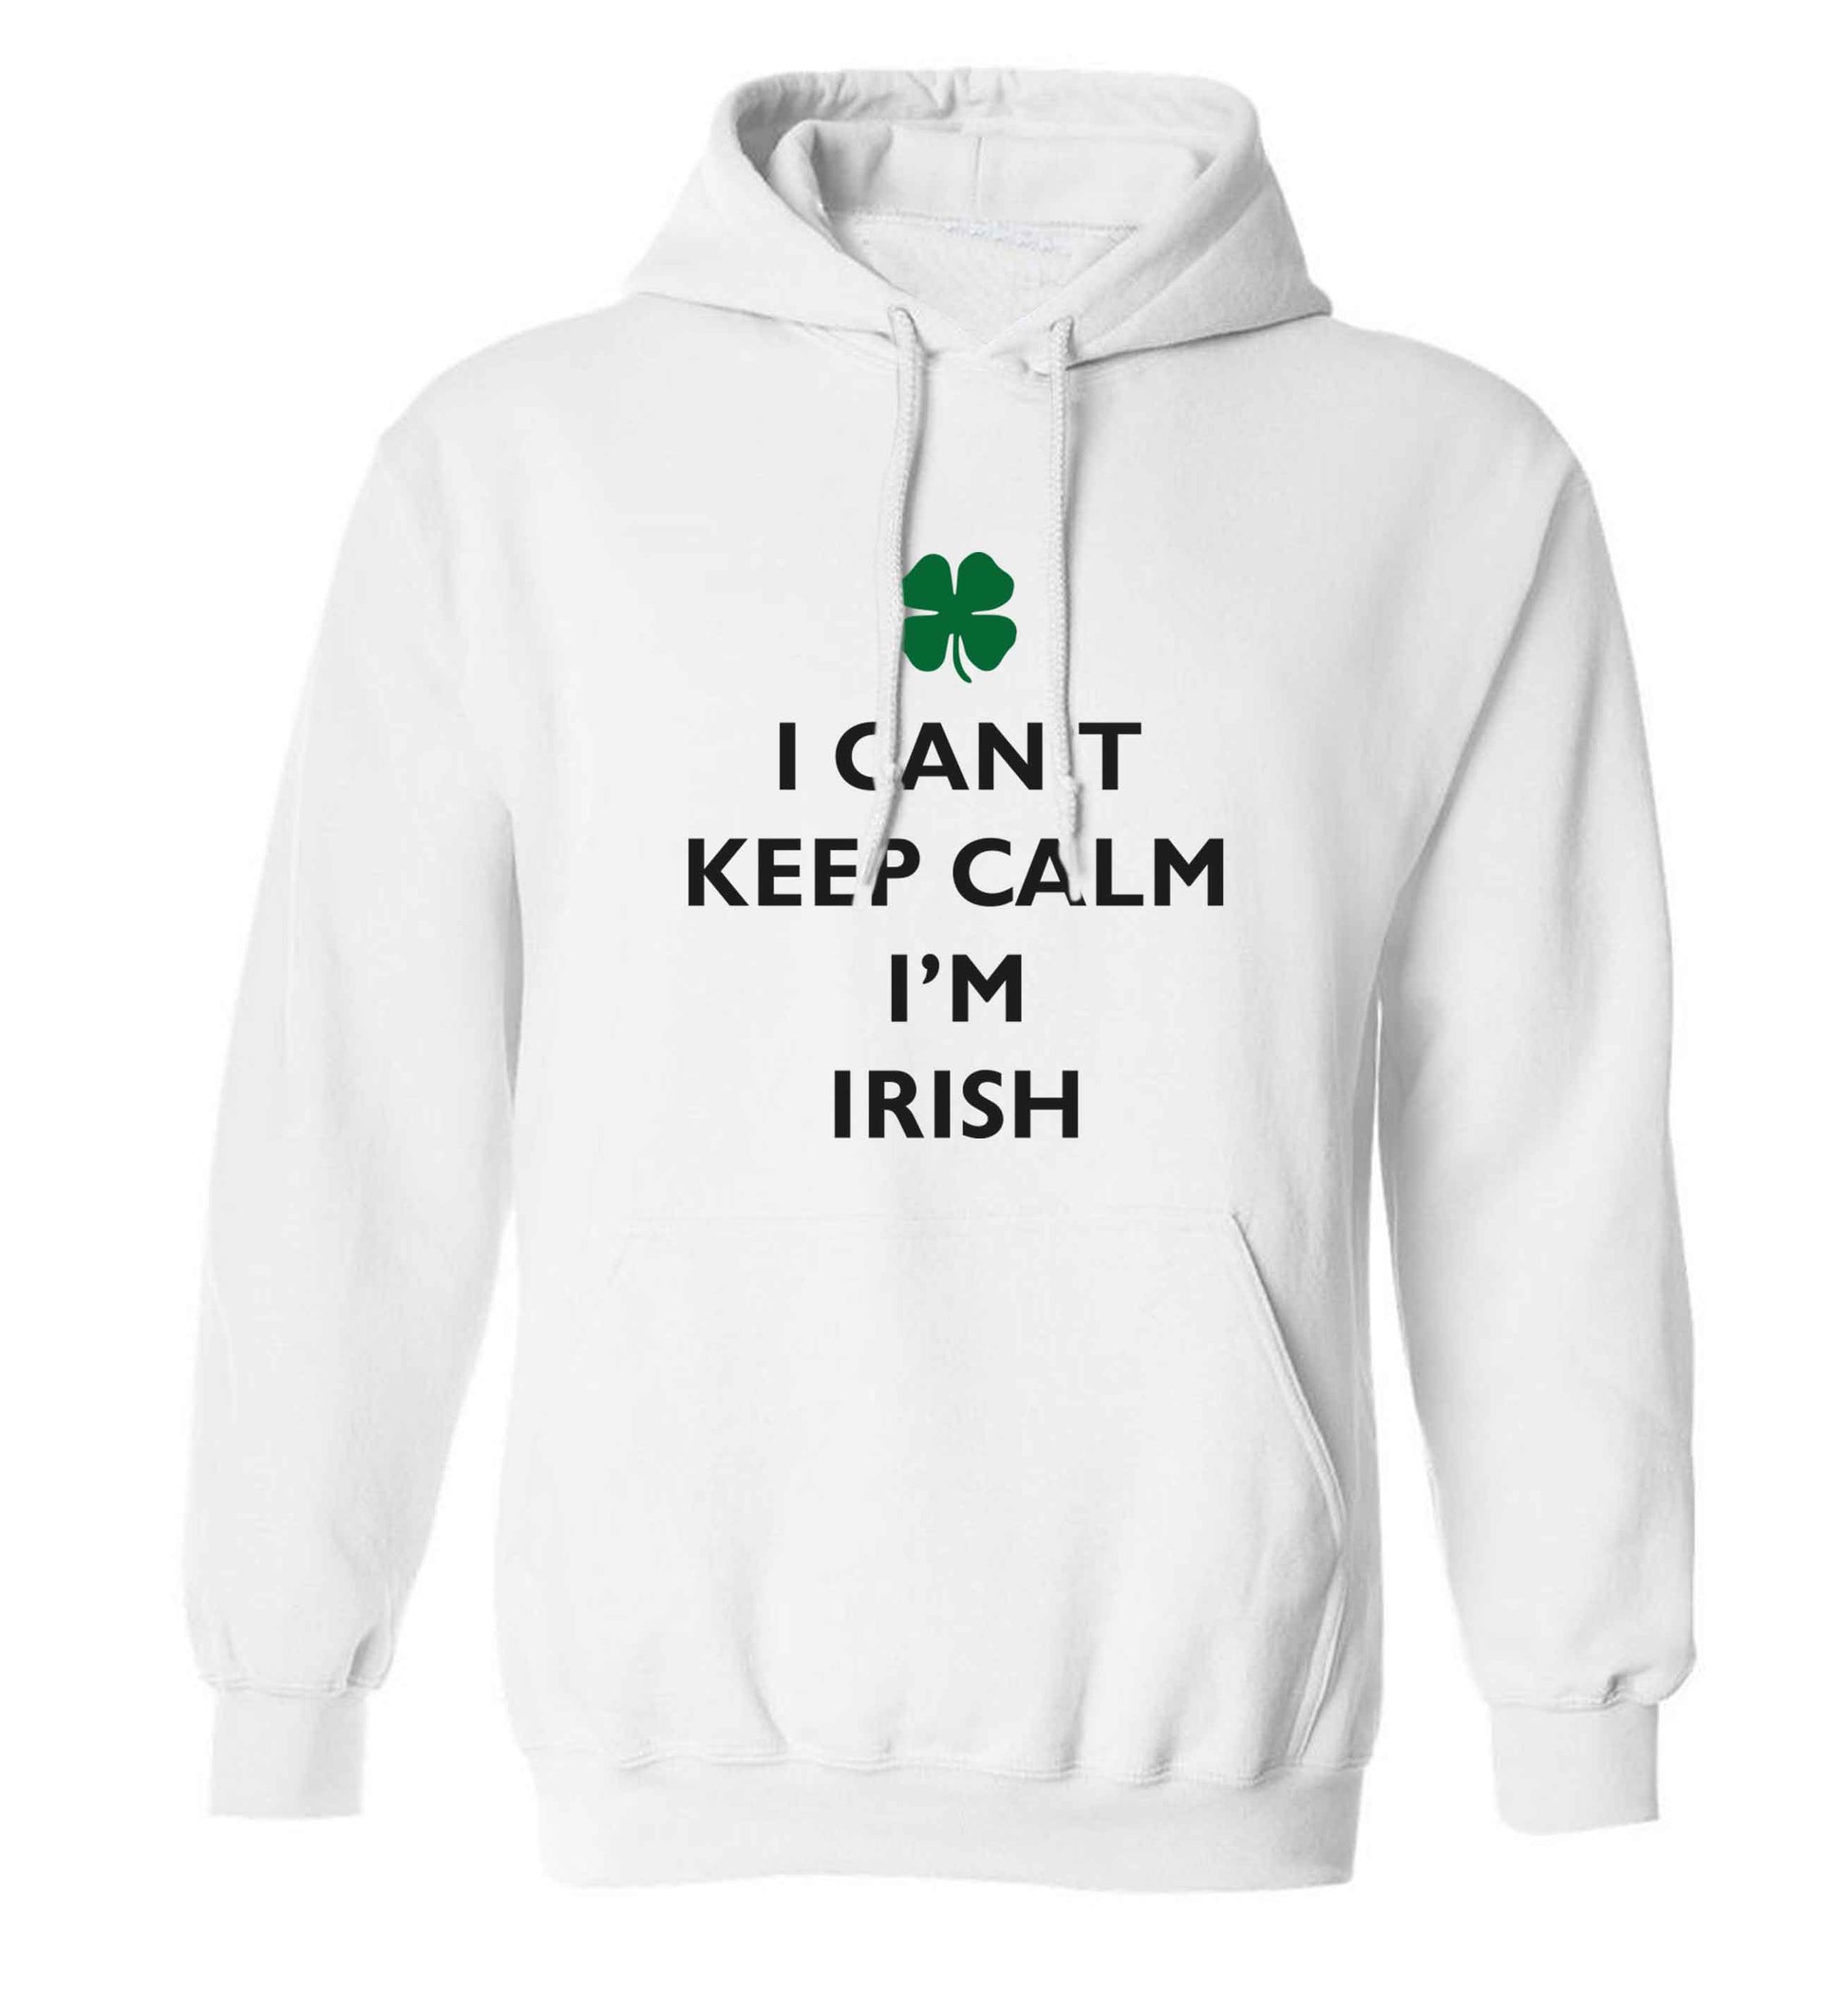 I can't keep calm I'm Irish adults unisex white hoodie 2XL